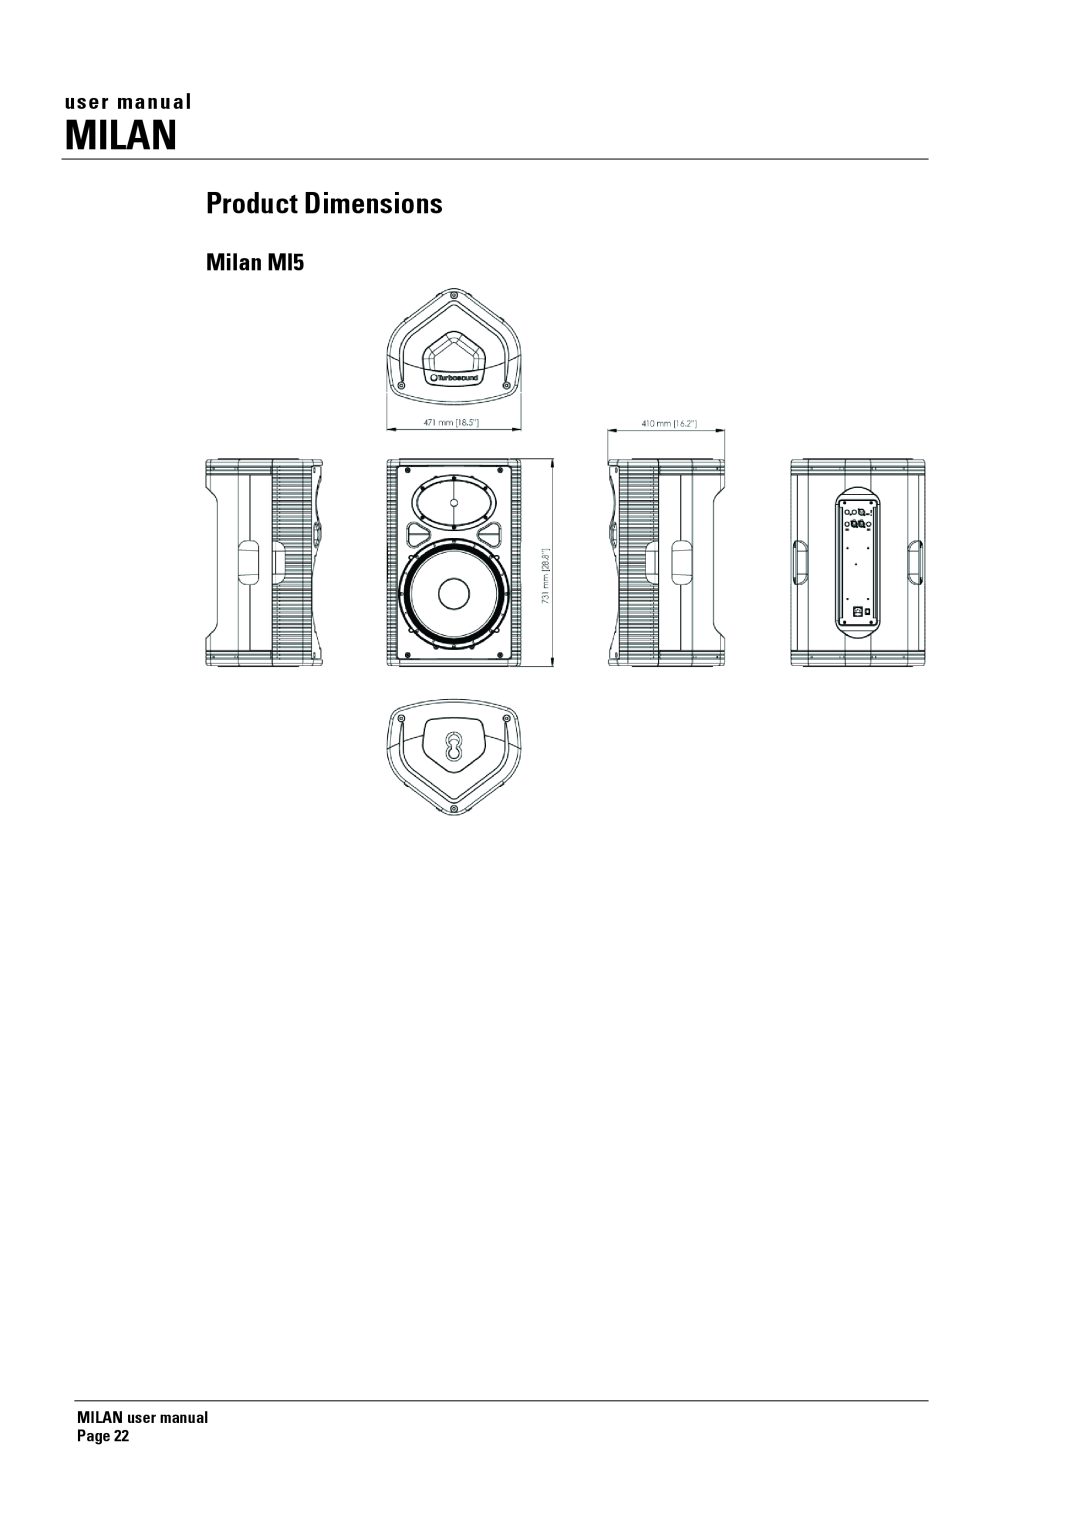 Turbosound Product Dimensions, Milan MI5, user manual 